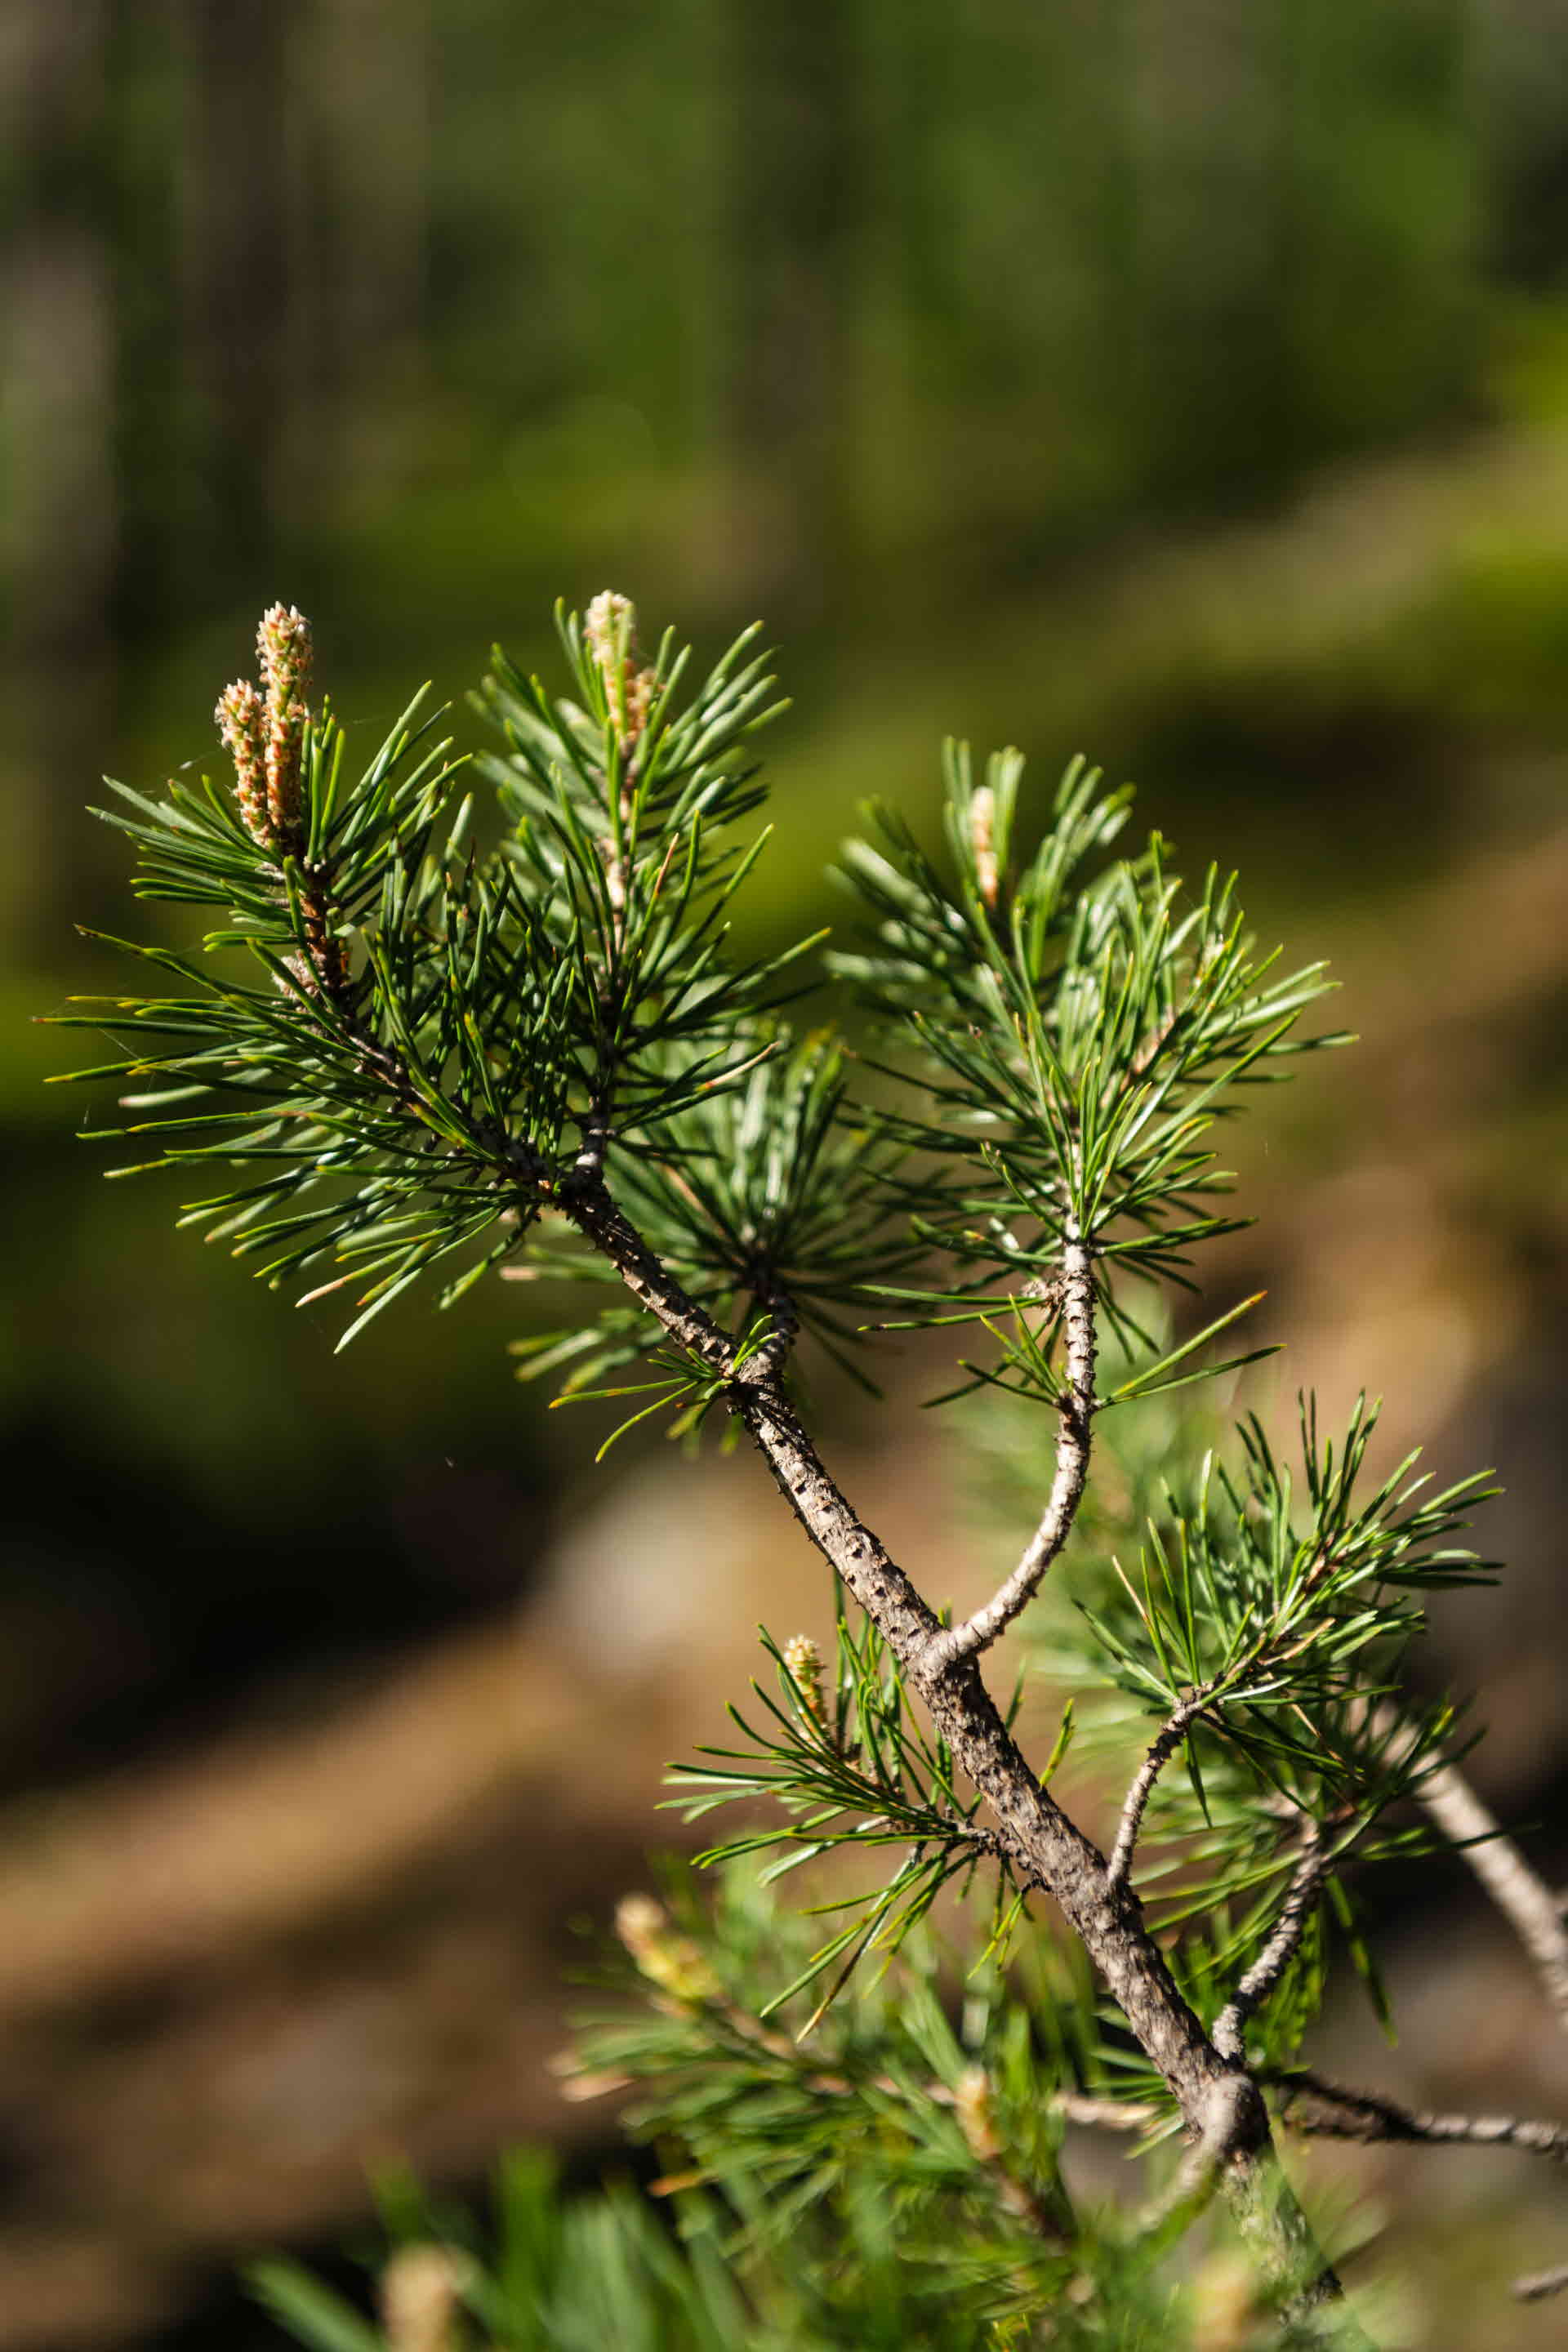 A pine branch.